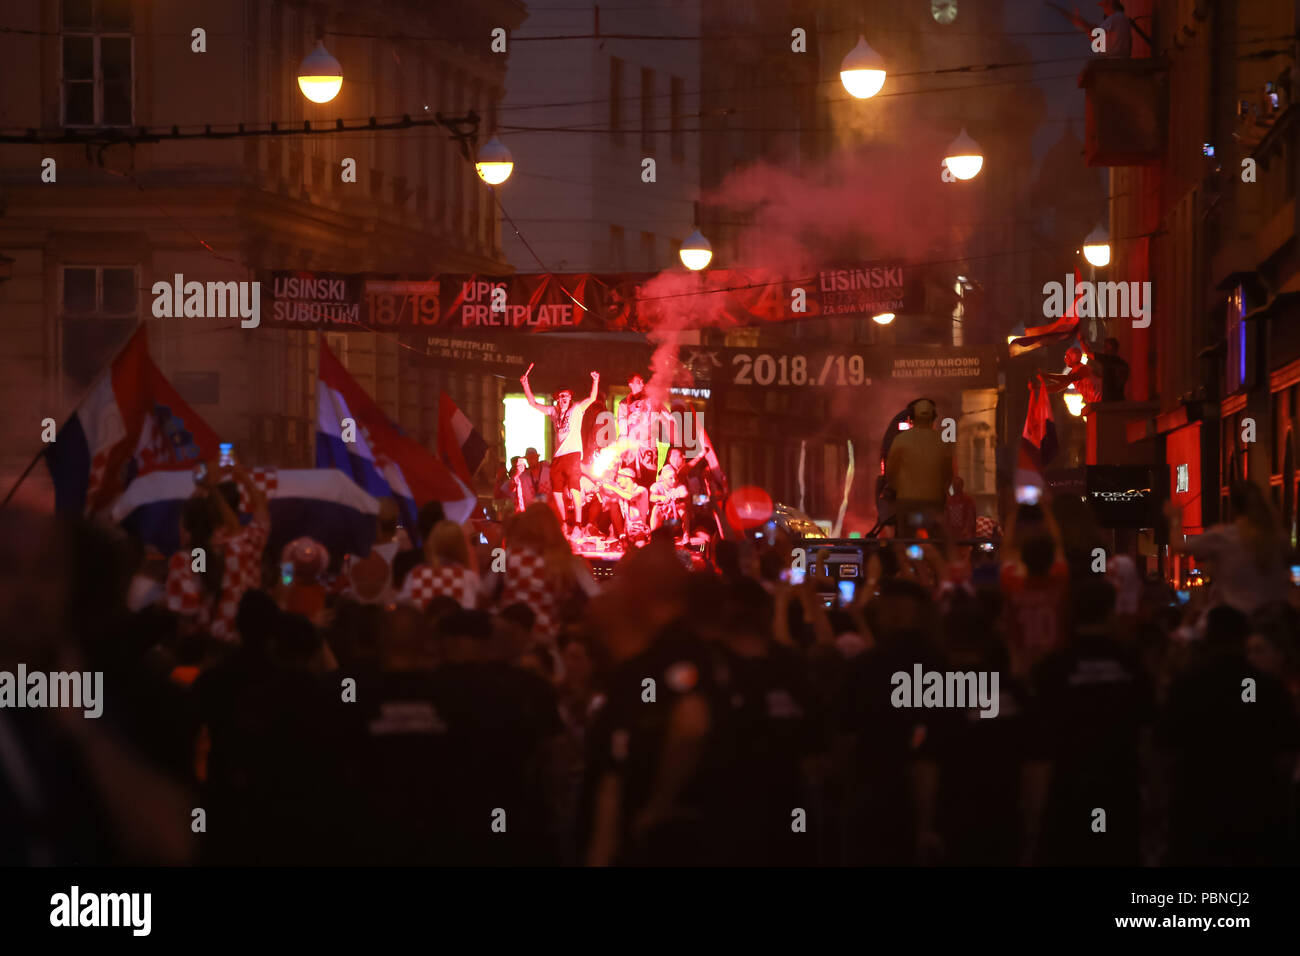 ZAGREB, CROATIA - JULY 16, 2018 : Croatia National Team welcome home celebration for 2nd place on Fifa World Cup 2018 - Croatia National Team arriving Stock Photo